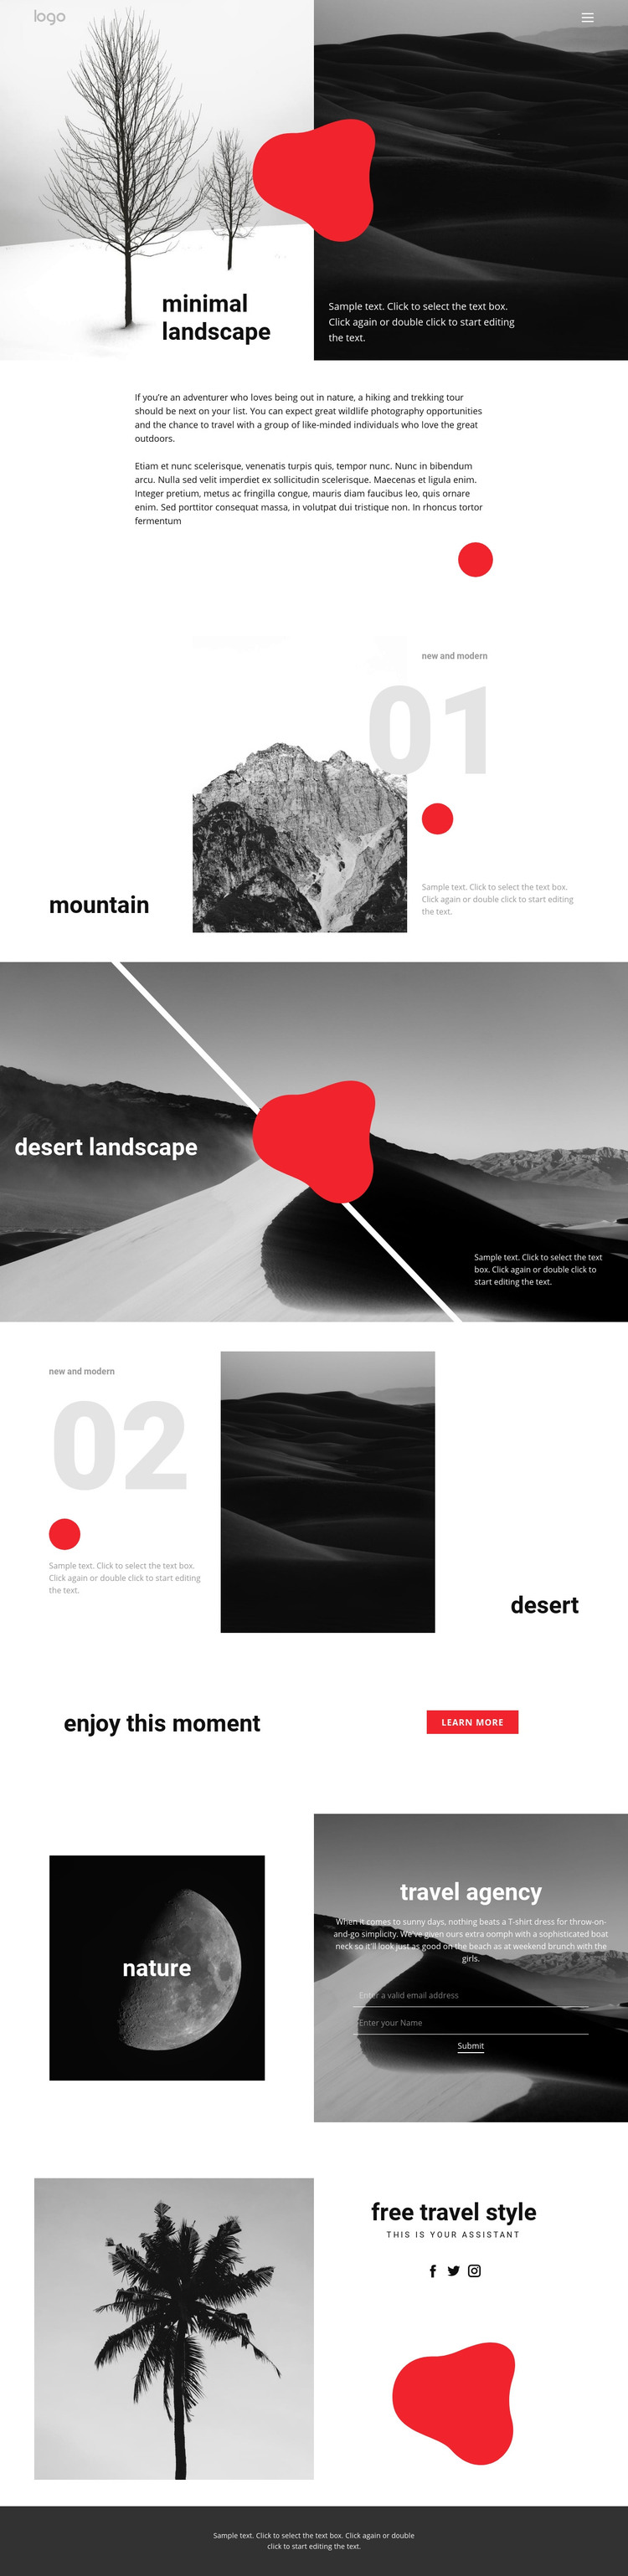 Minimal landscape photo Homepage Design